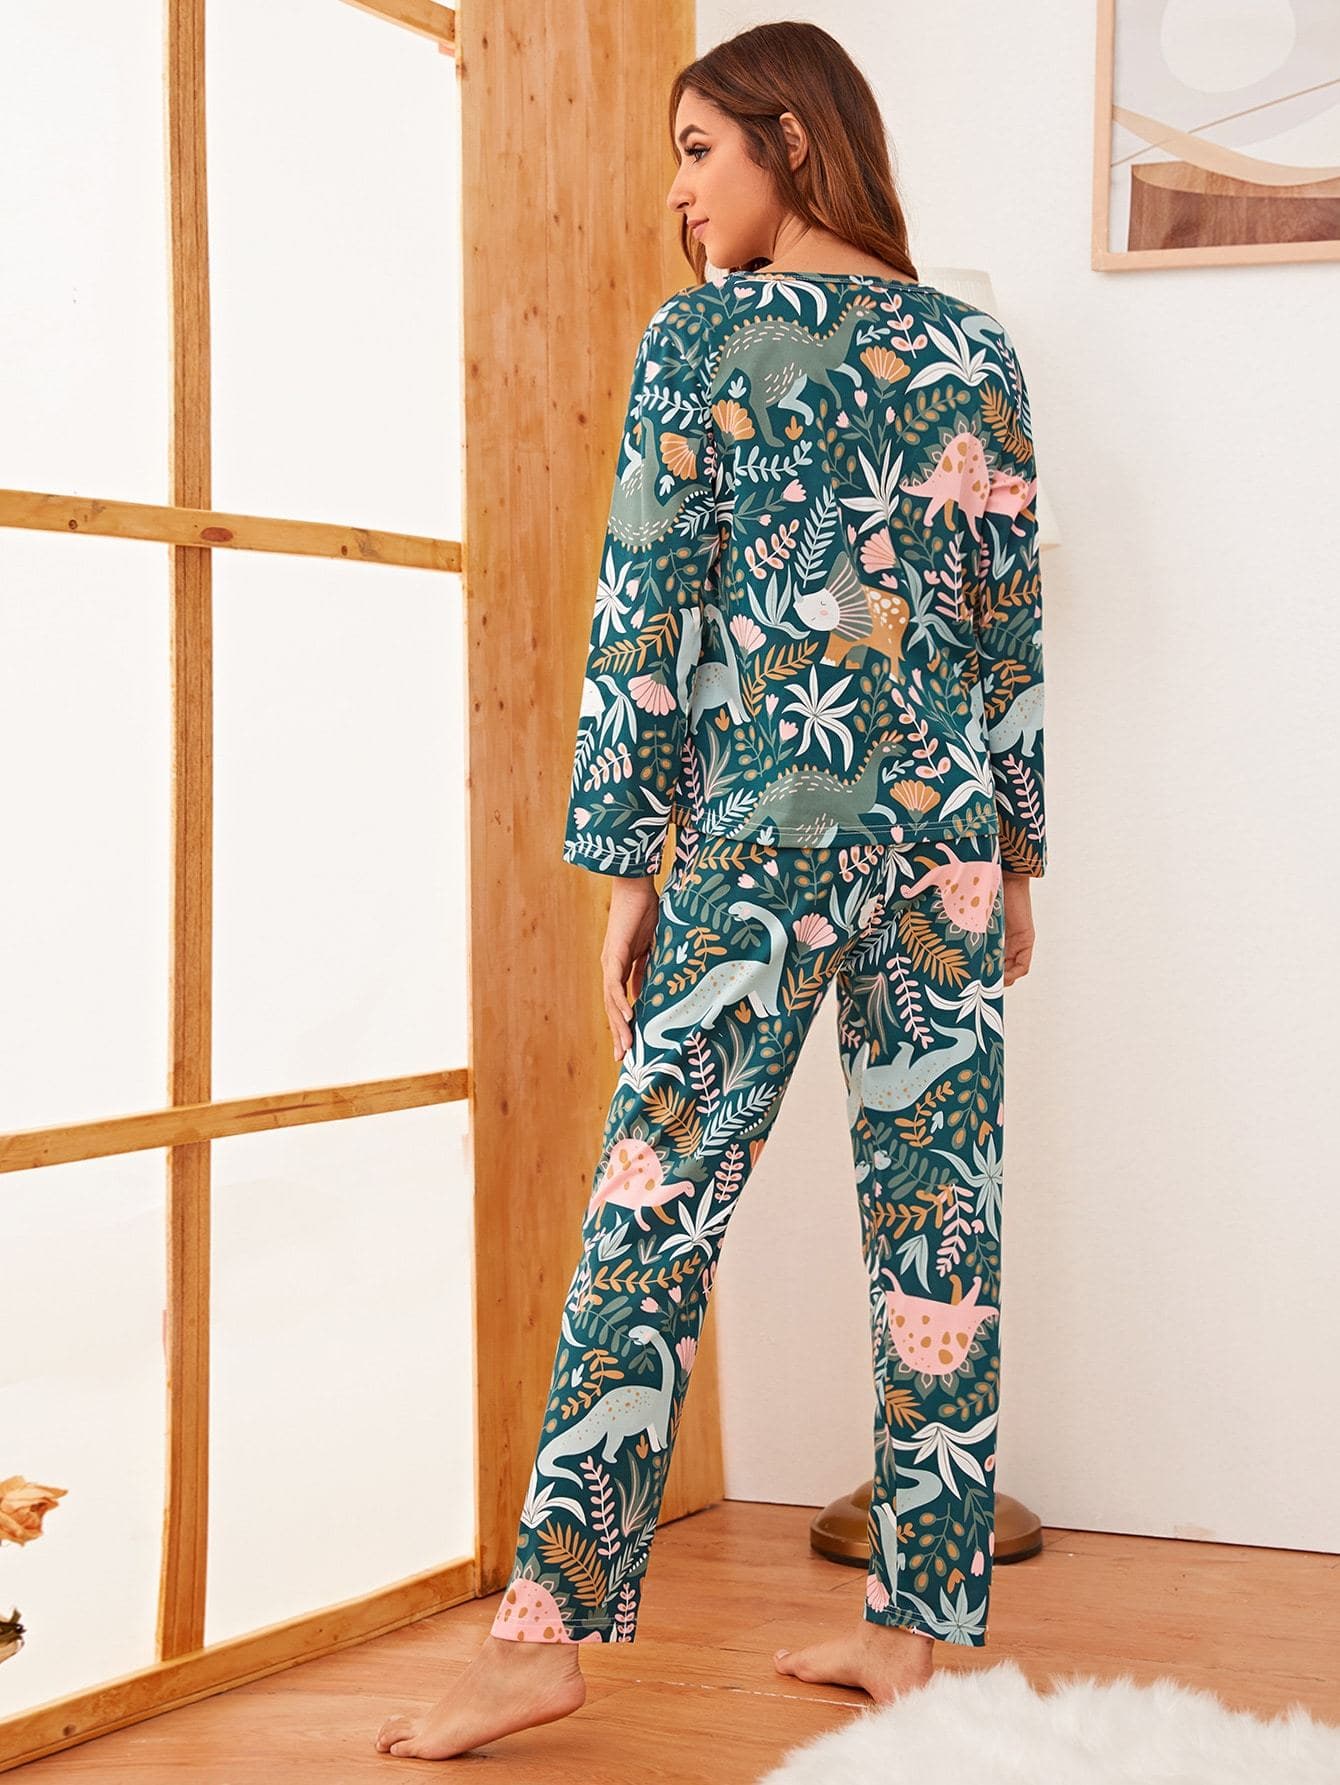 Green Round Neck Leaf and Dinosaur Print Pyjama Sleepwear Set With Eye Cover